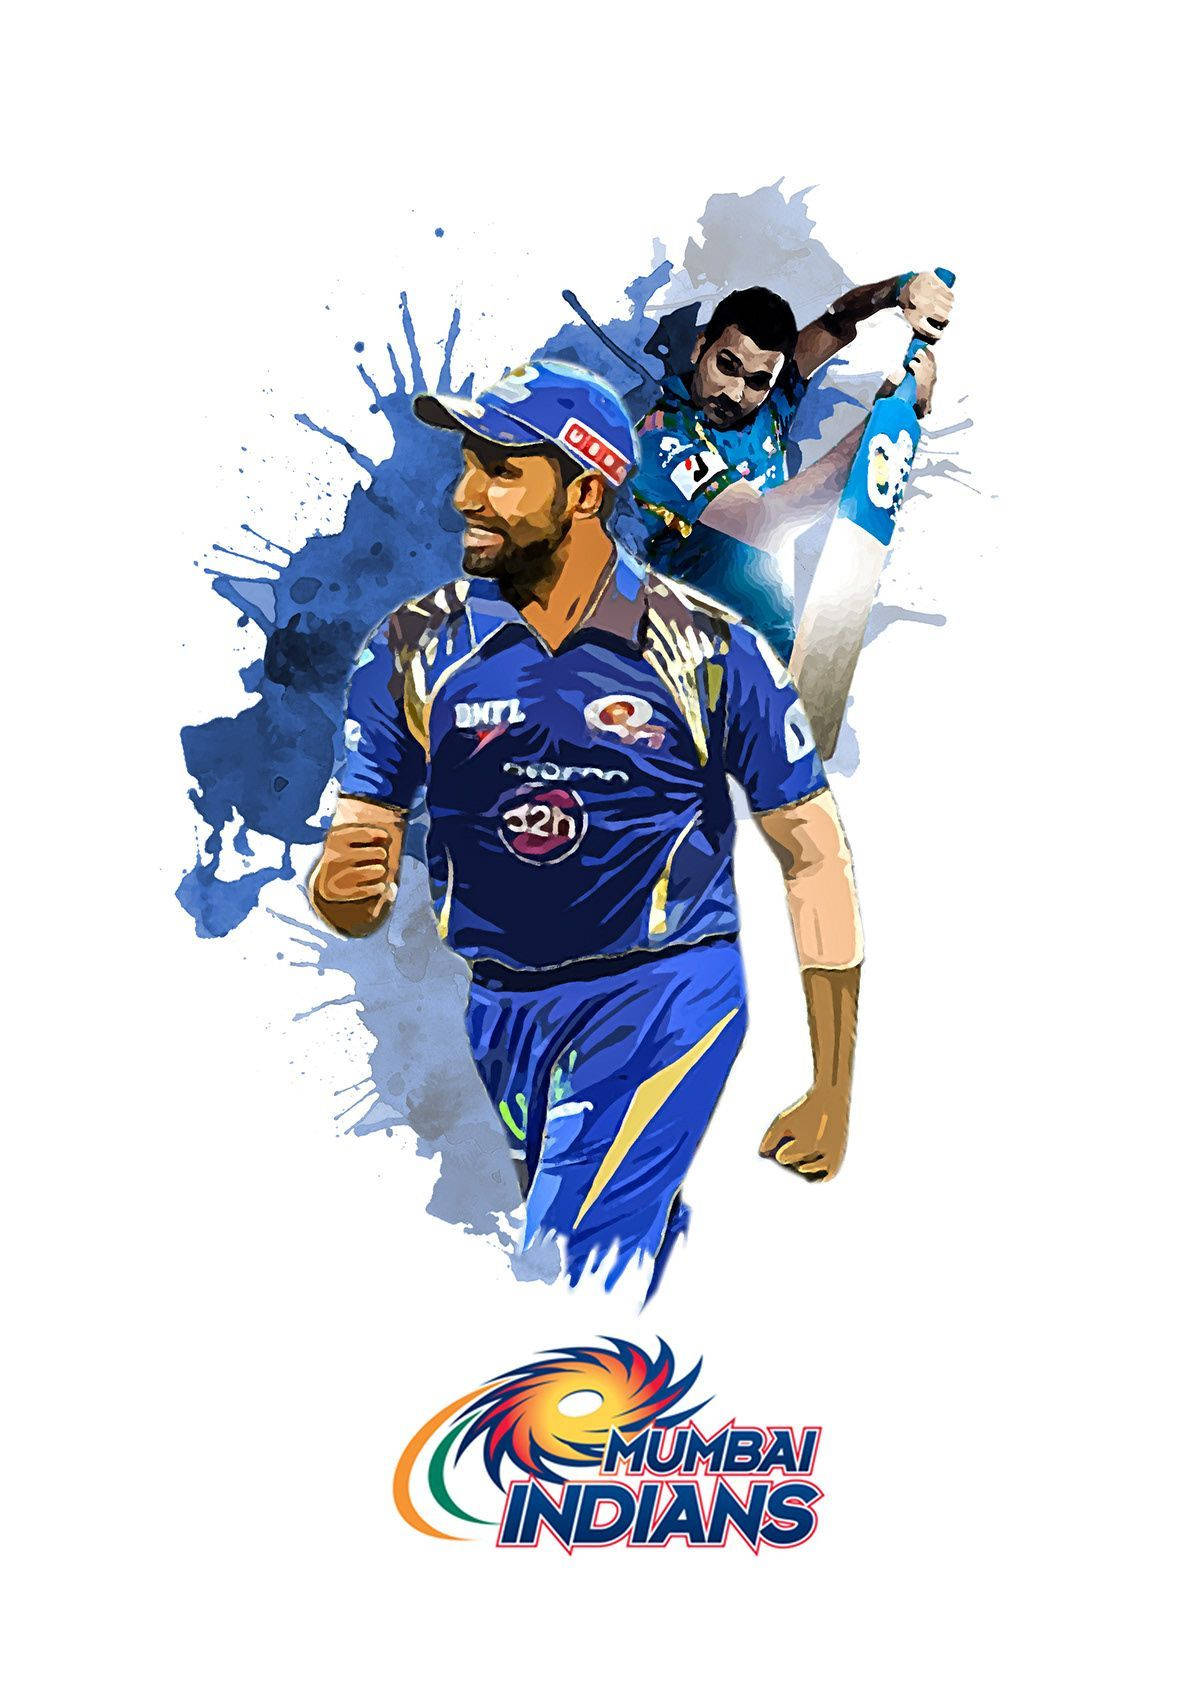 Mumbai Indians Player Rohit Sharma Poster Background